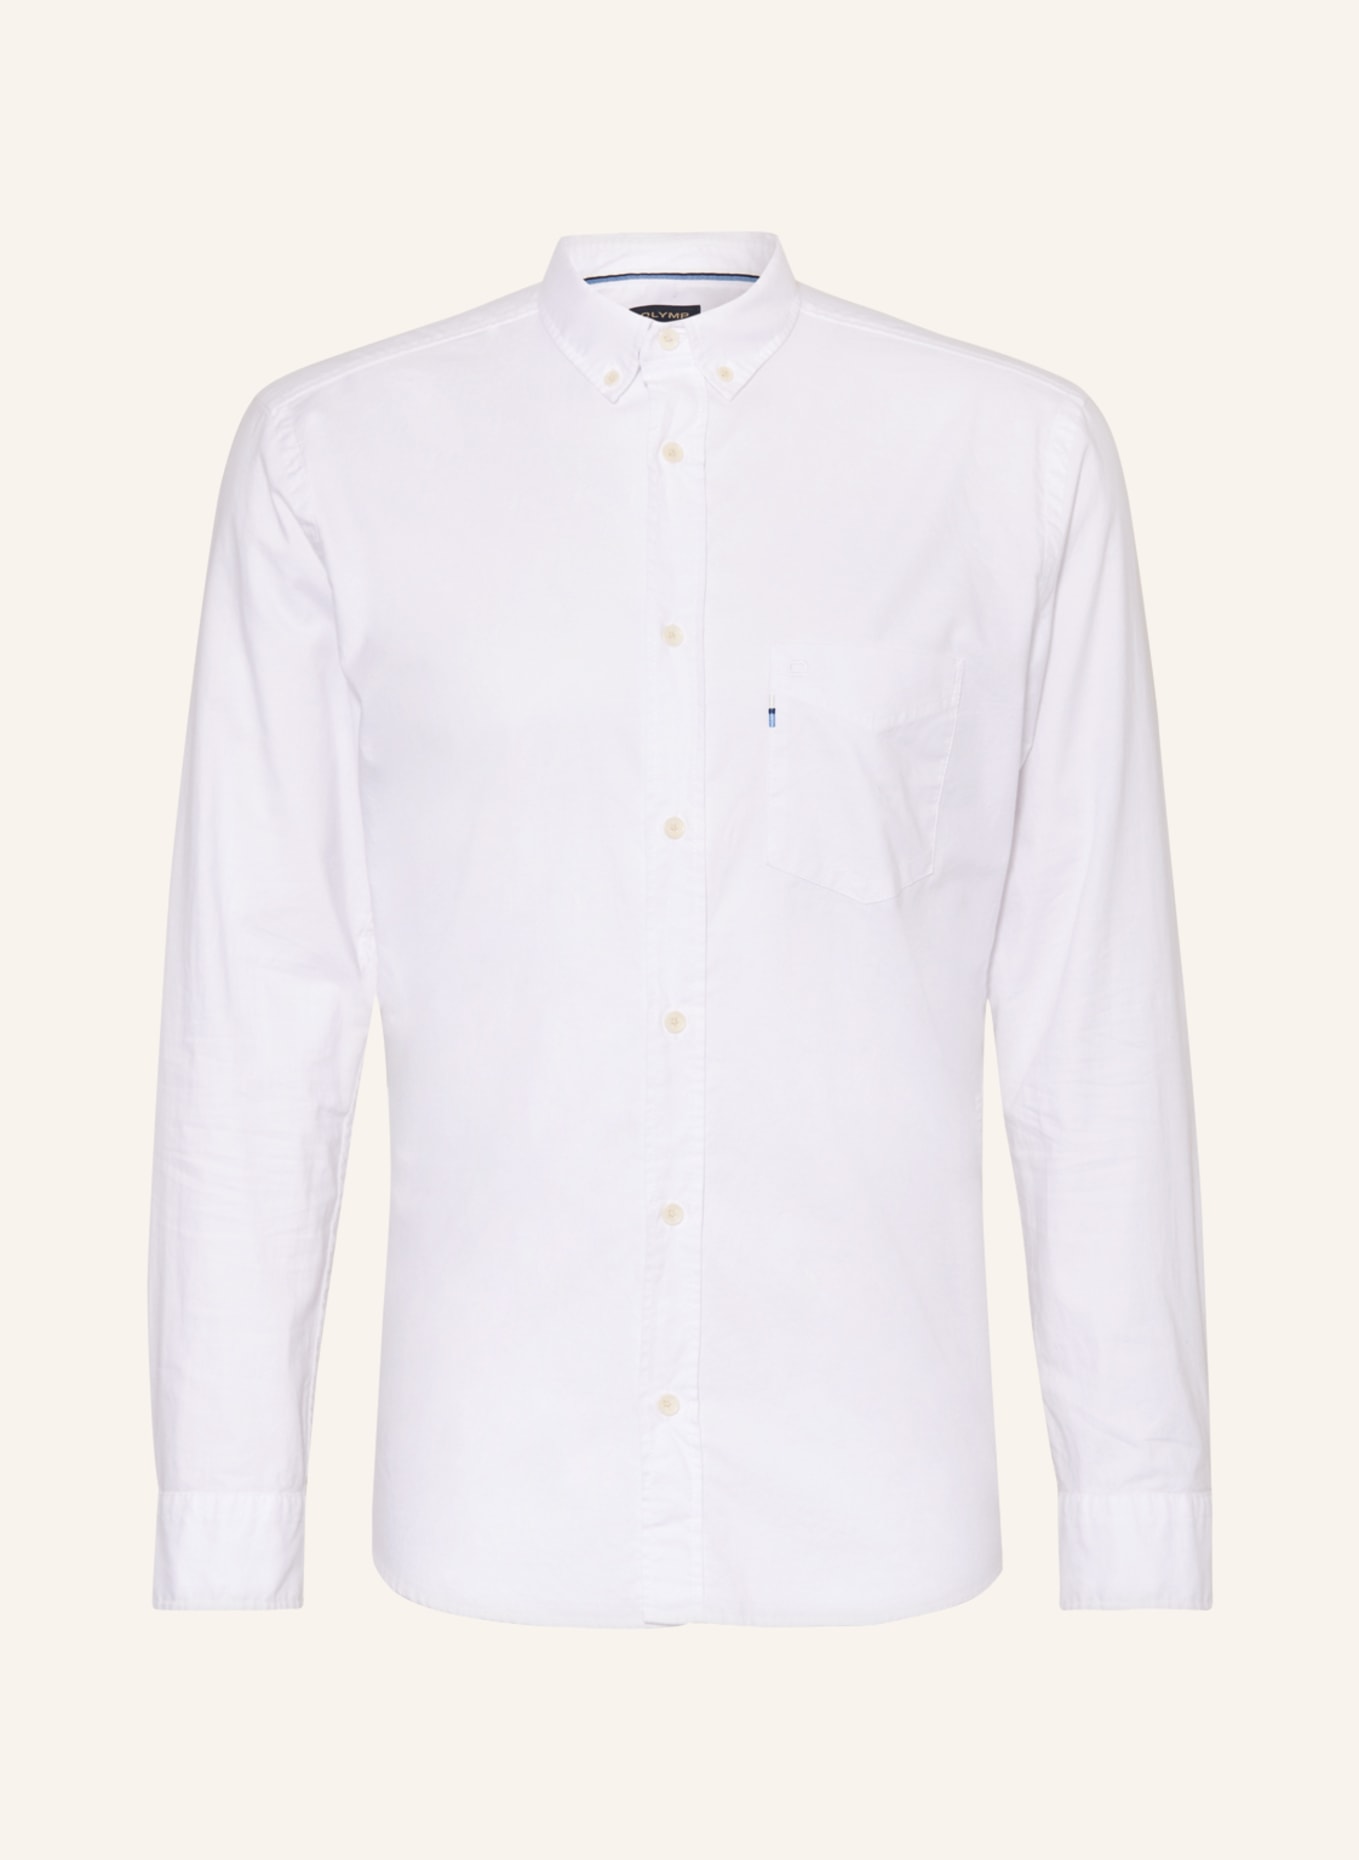 OLYMP Hemd regular fit, Farbe: WEISS (Bild 1)